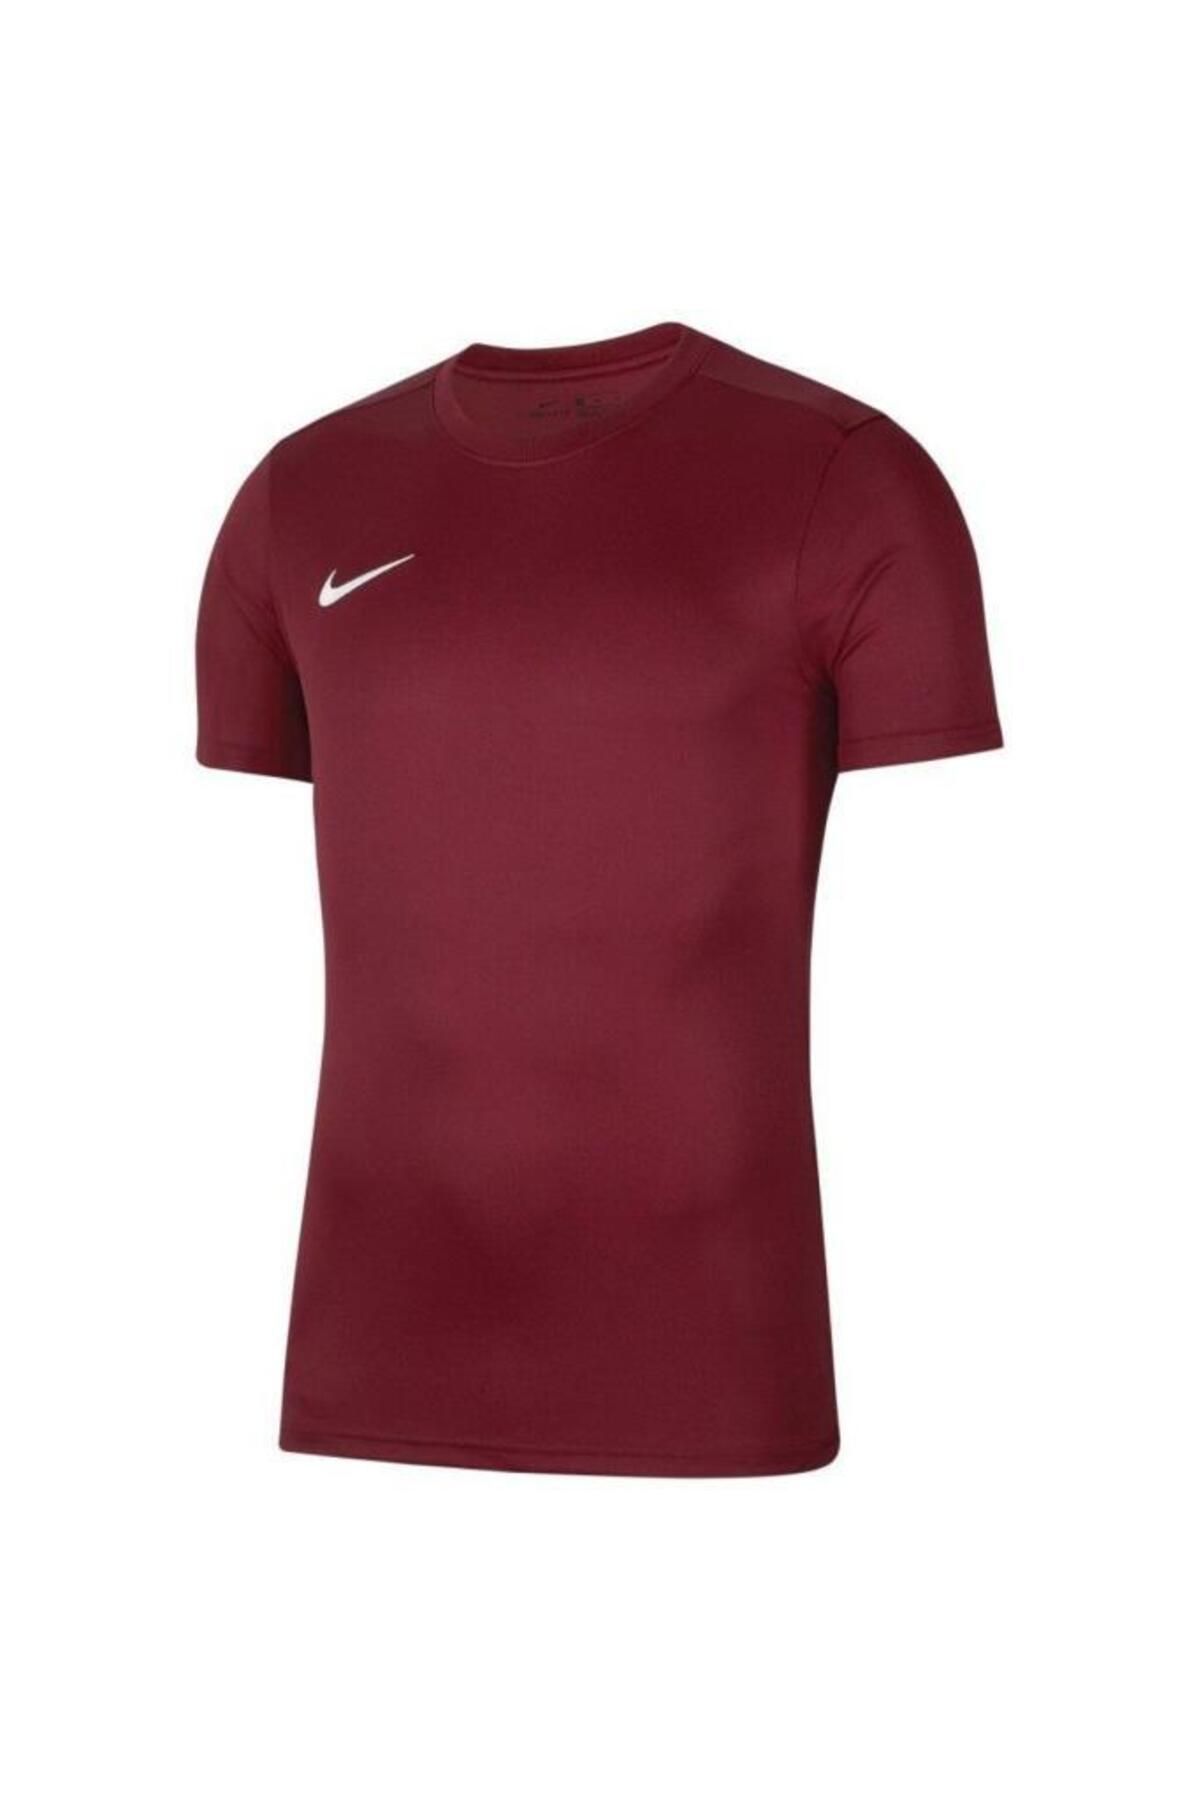 Nike Dry Park Vıı Bv6708-677 Erkek Tişört